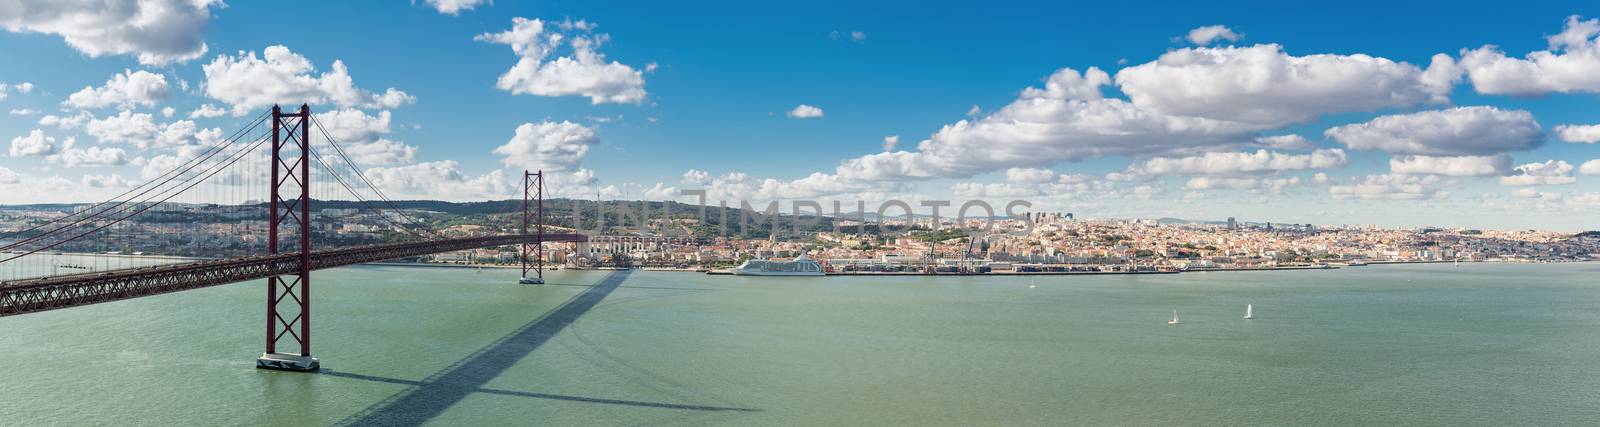 Panorama Lisbon Bridge by vichie81